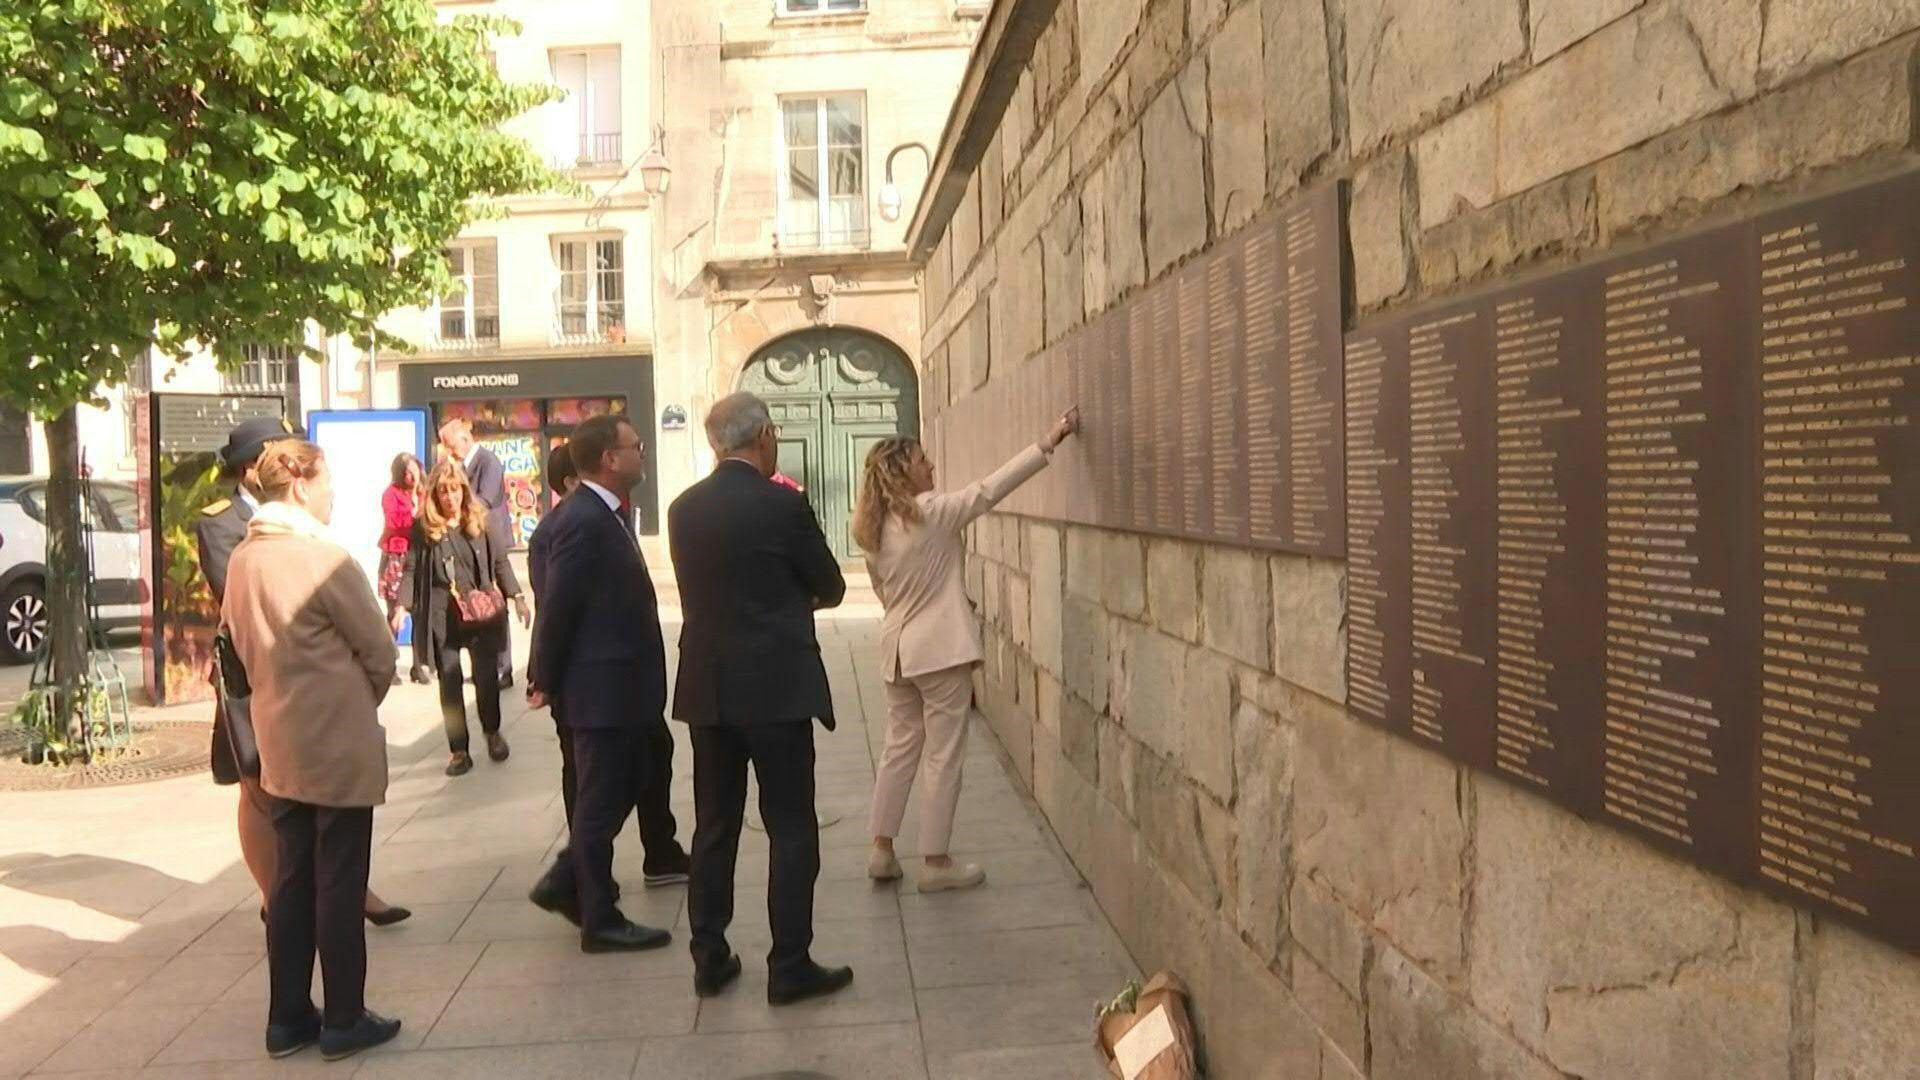 French Secretary of State for Veterans visits vandalised Holocaust Memorial